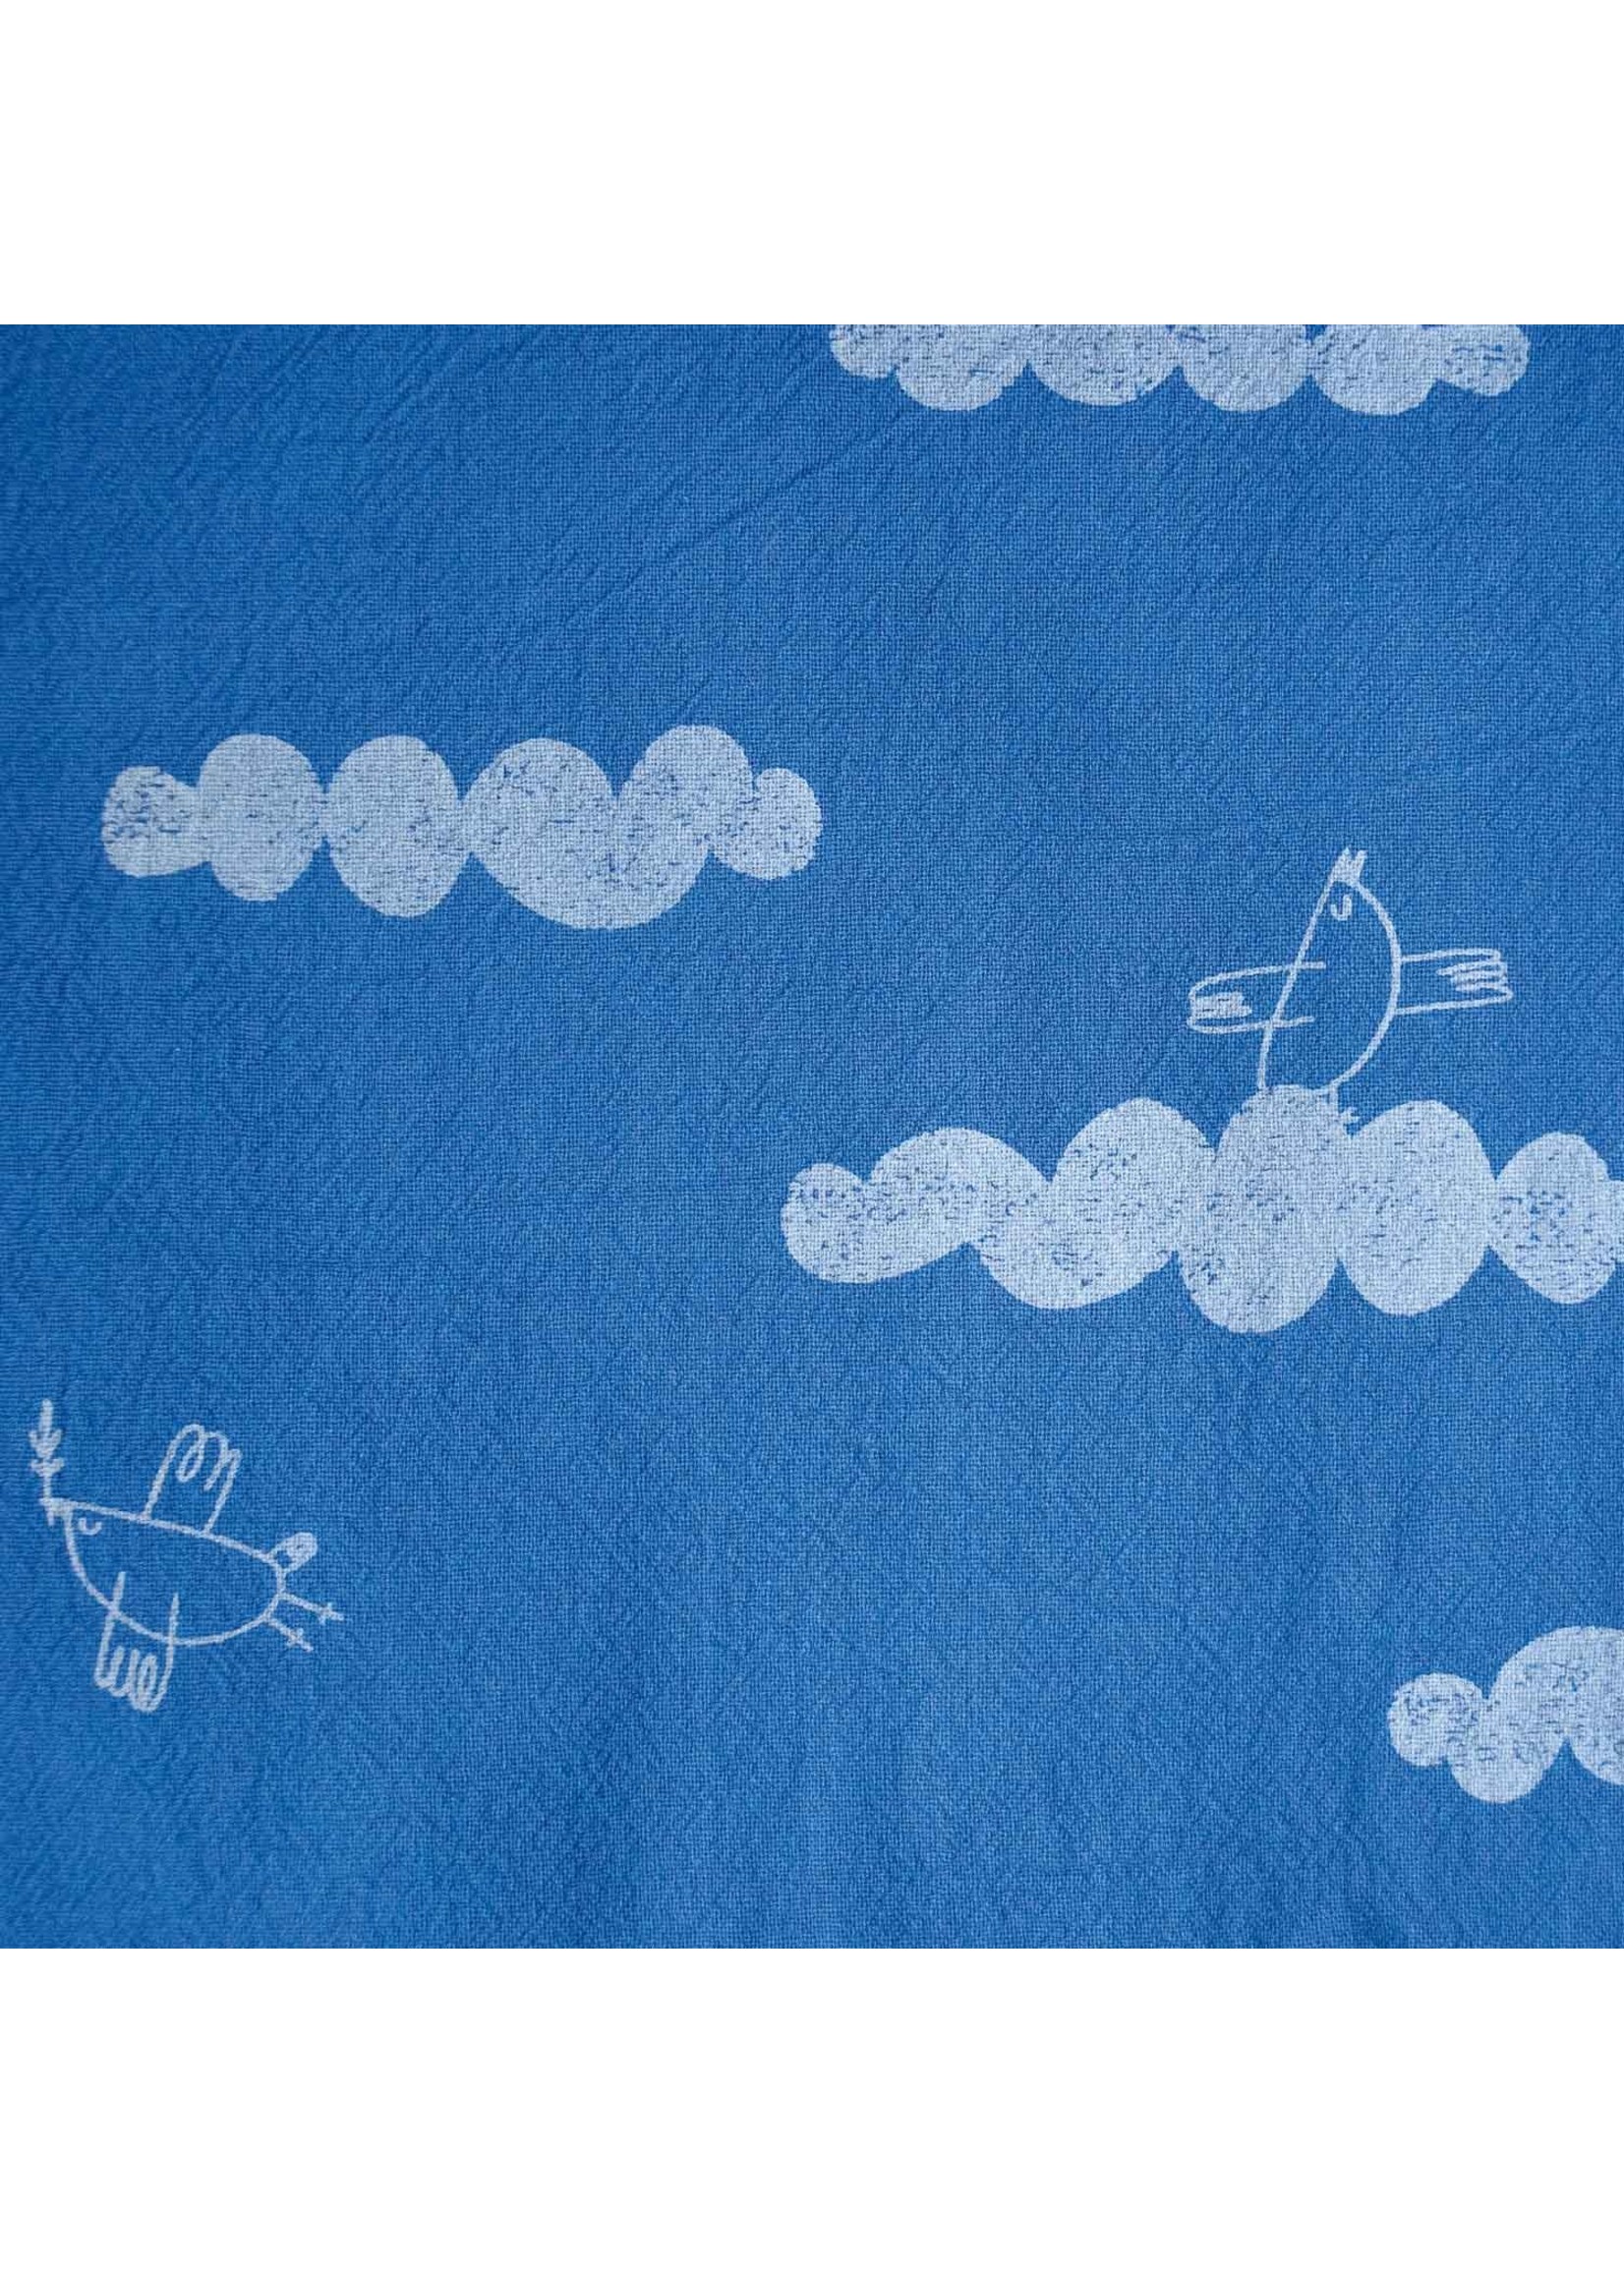 Katia Fabrics Rustic Cotton - Peace Maker Sky